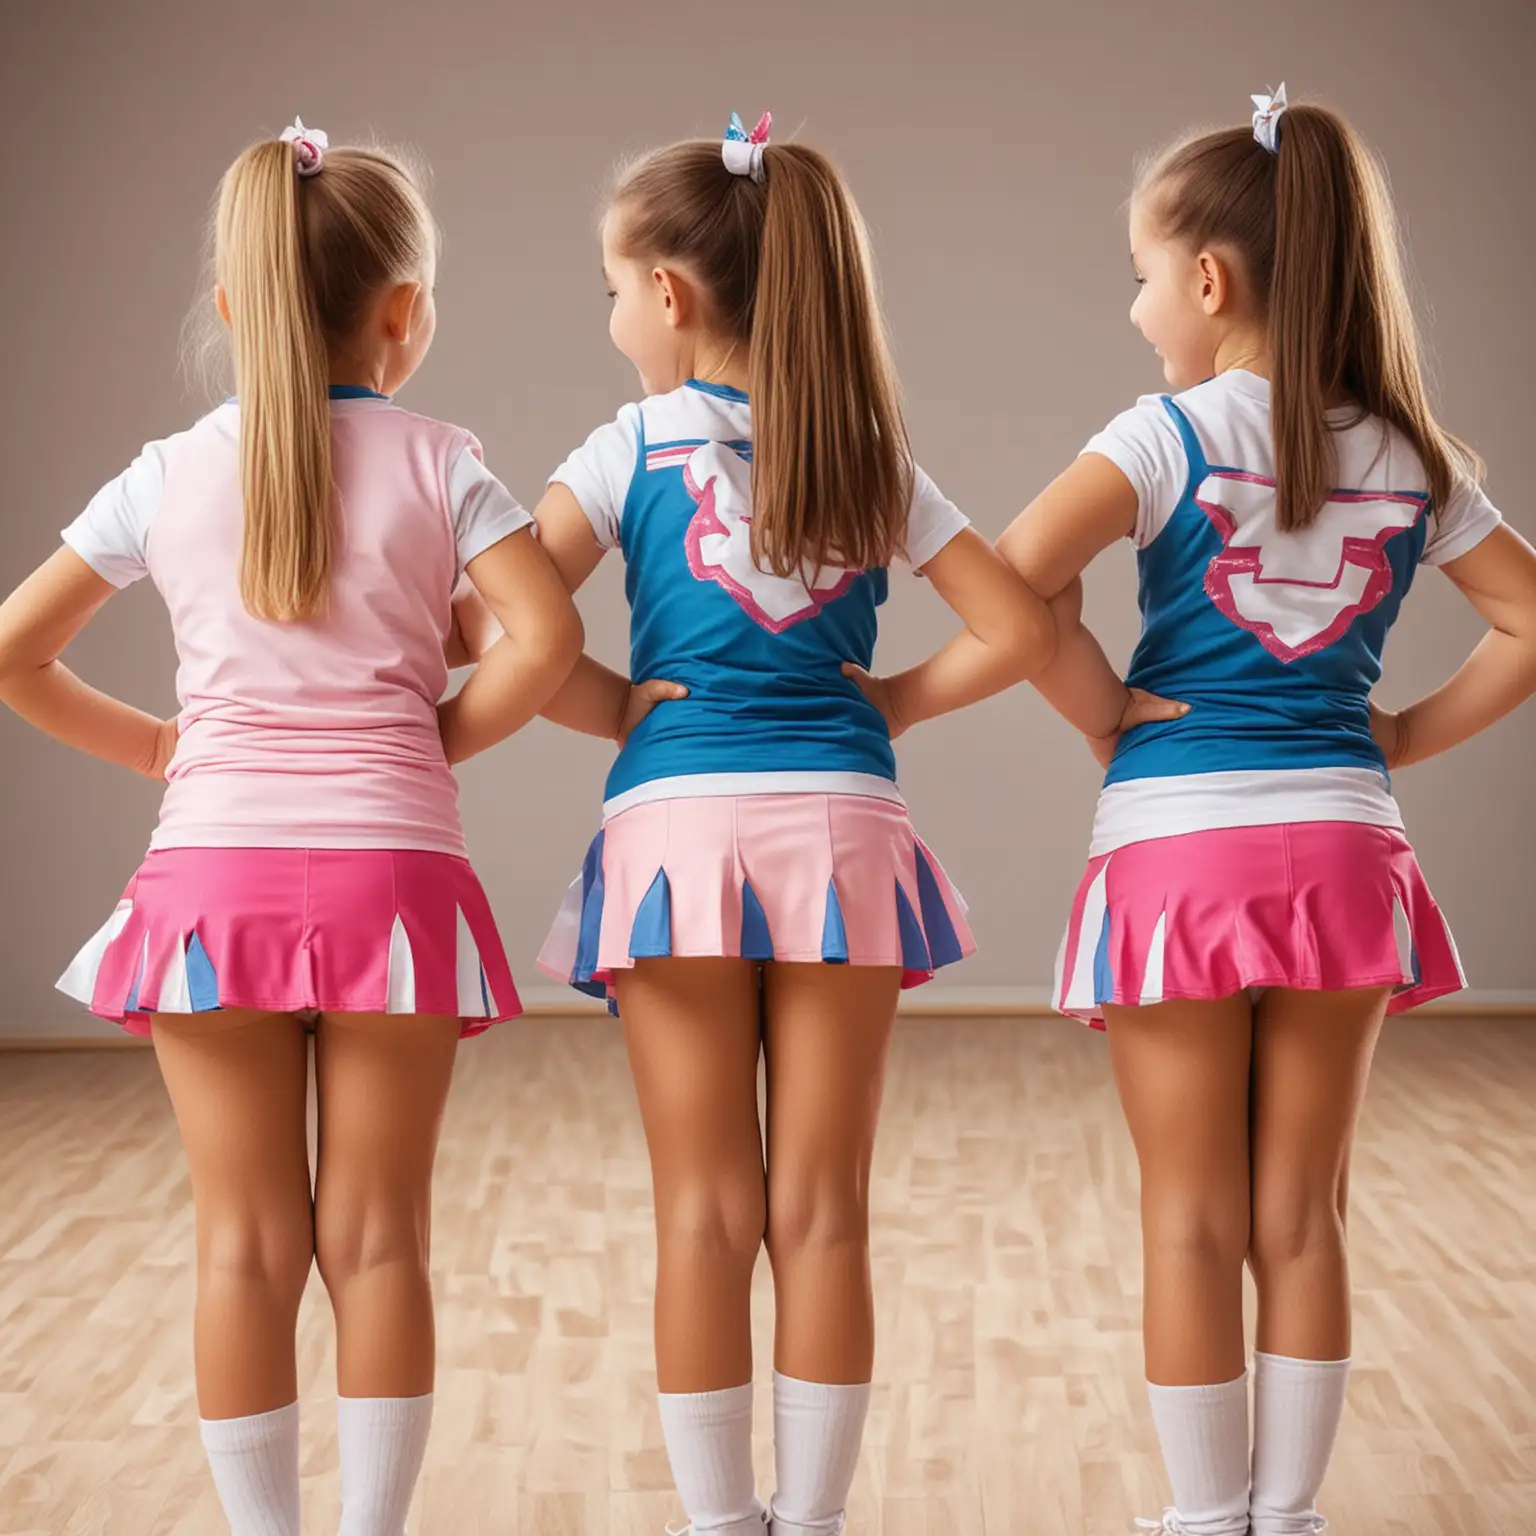 Cheerleaders children girls. Ass cheeks showing. Back view